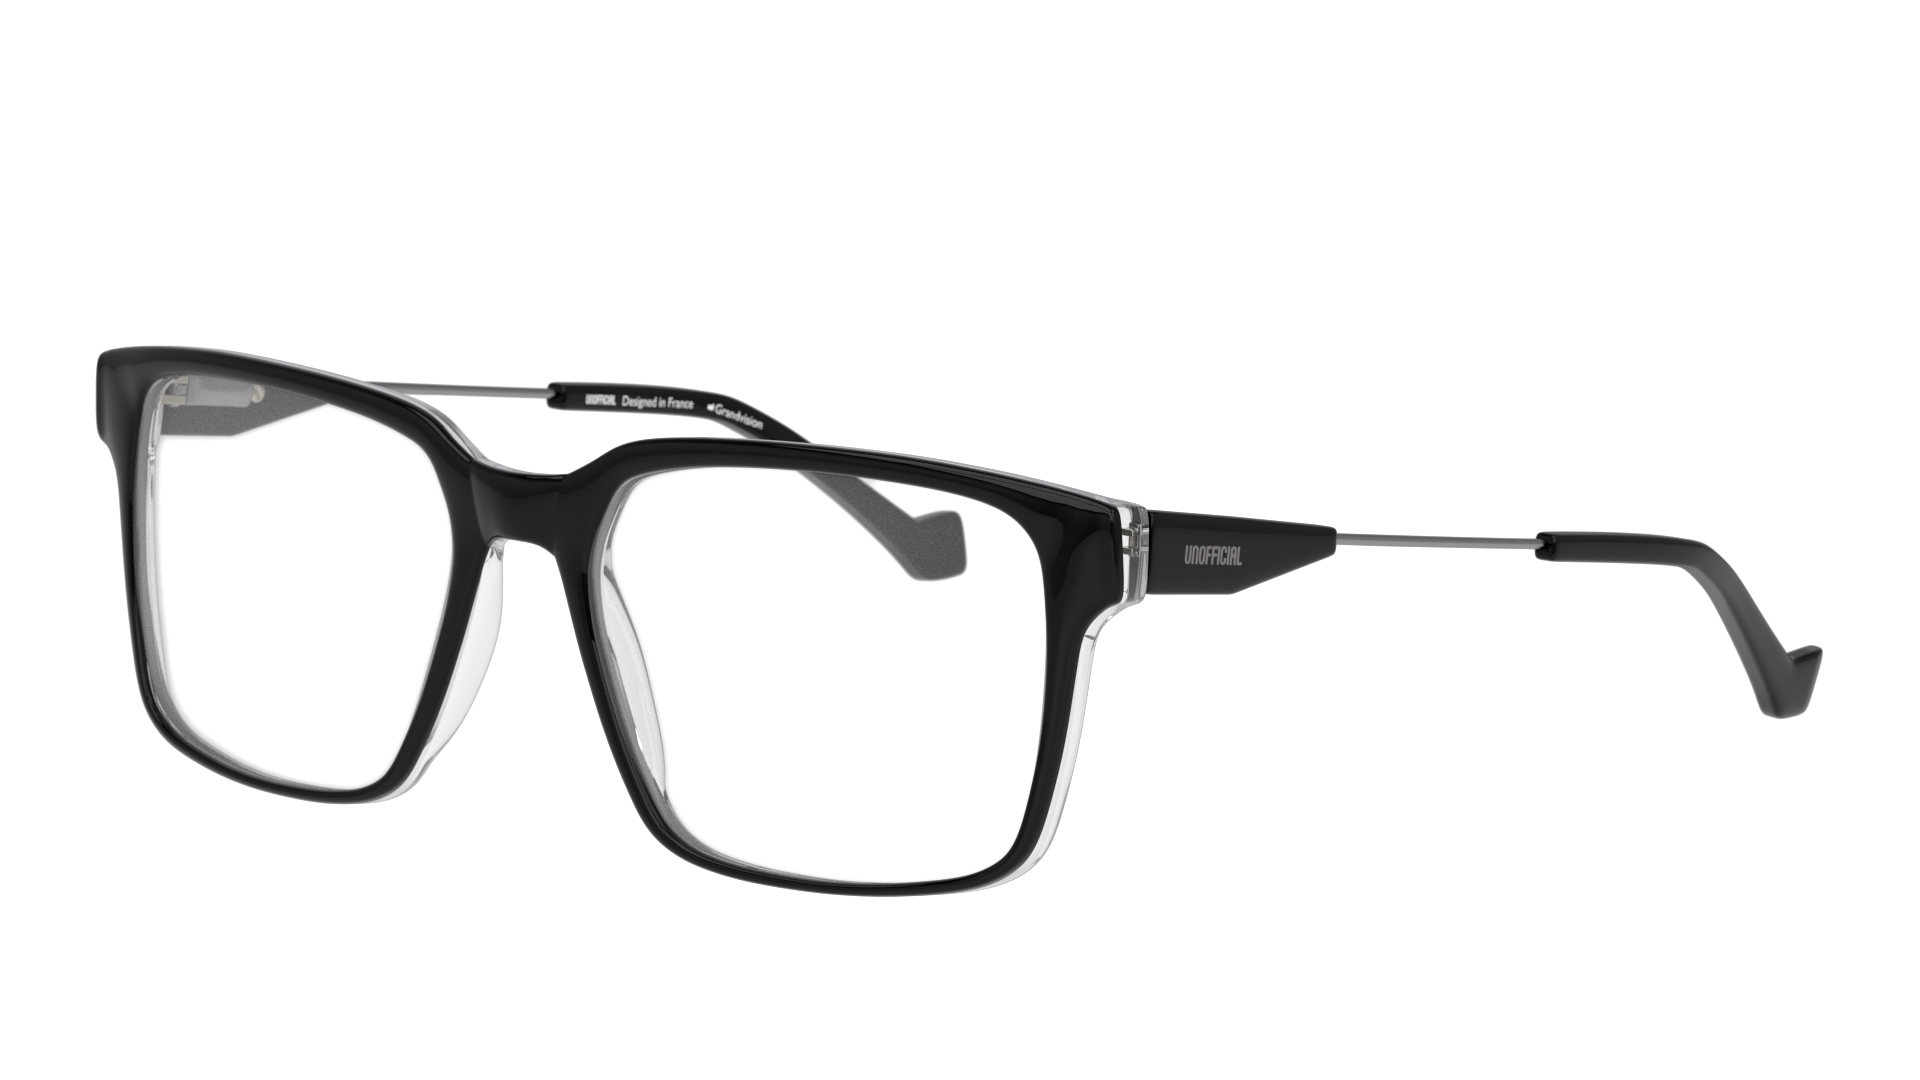 Angle_Left01 Unofficial UNOM0288 Glasses Transparent / Black